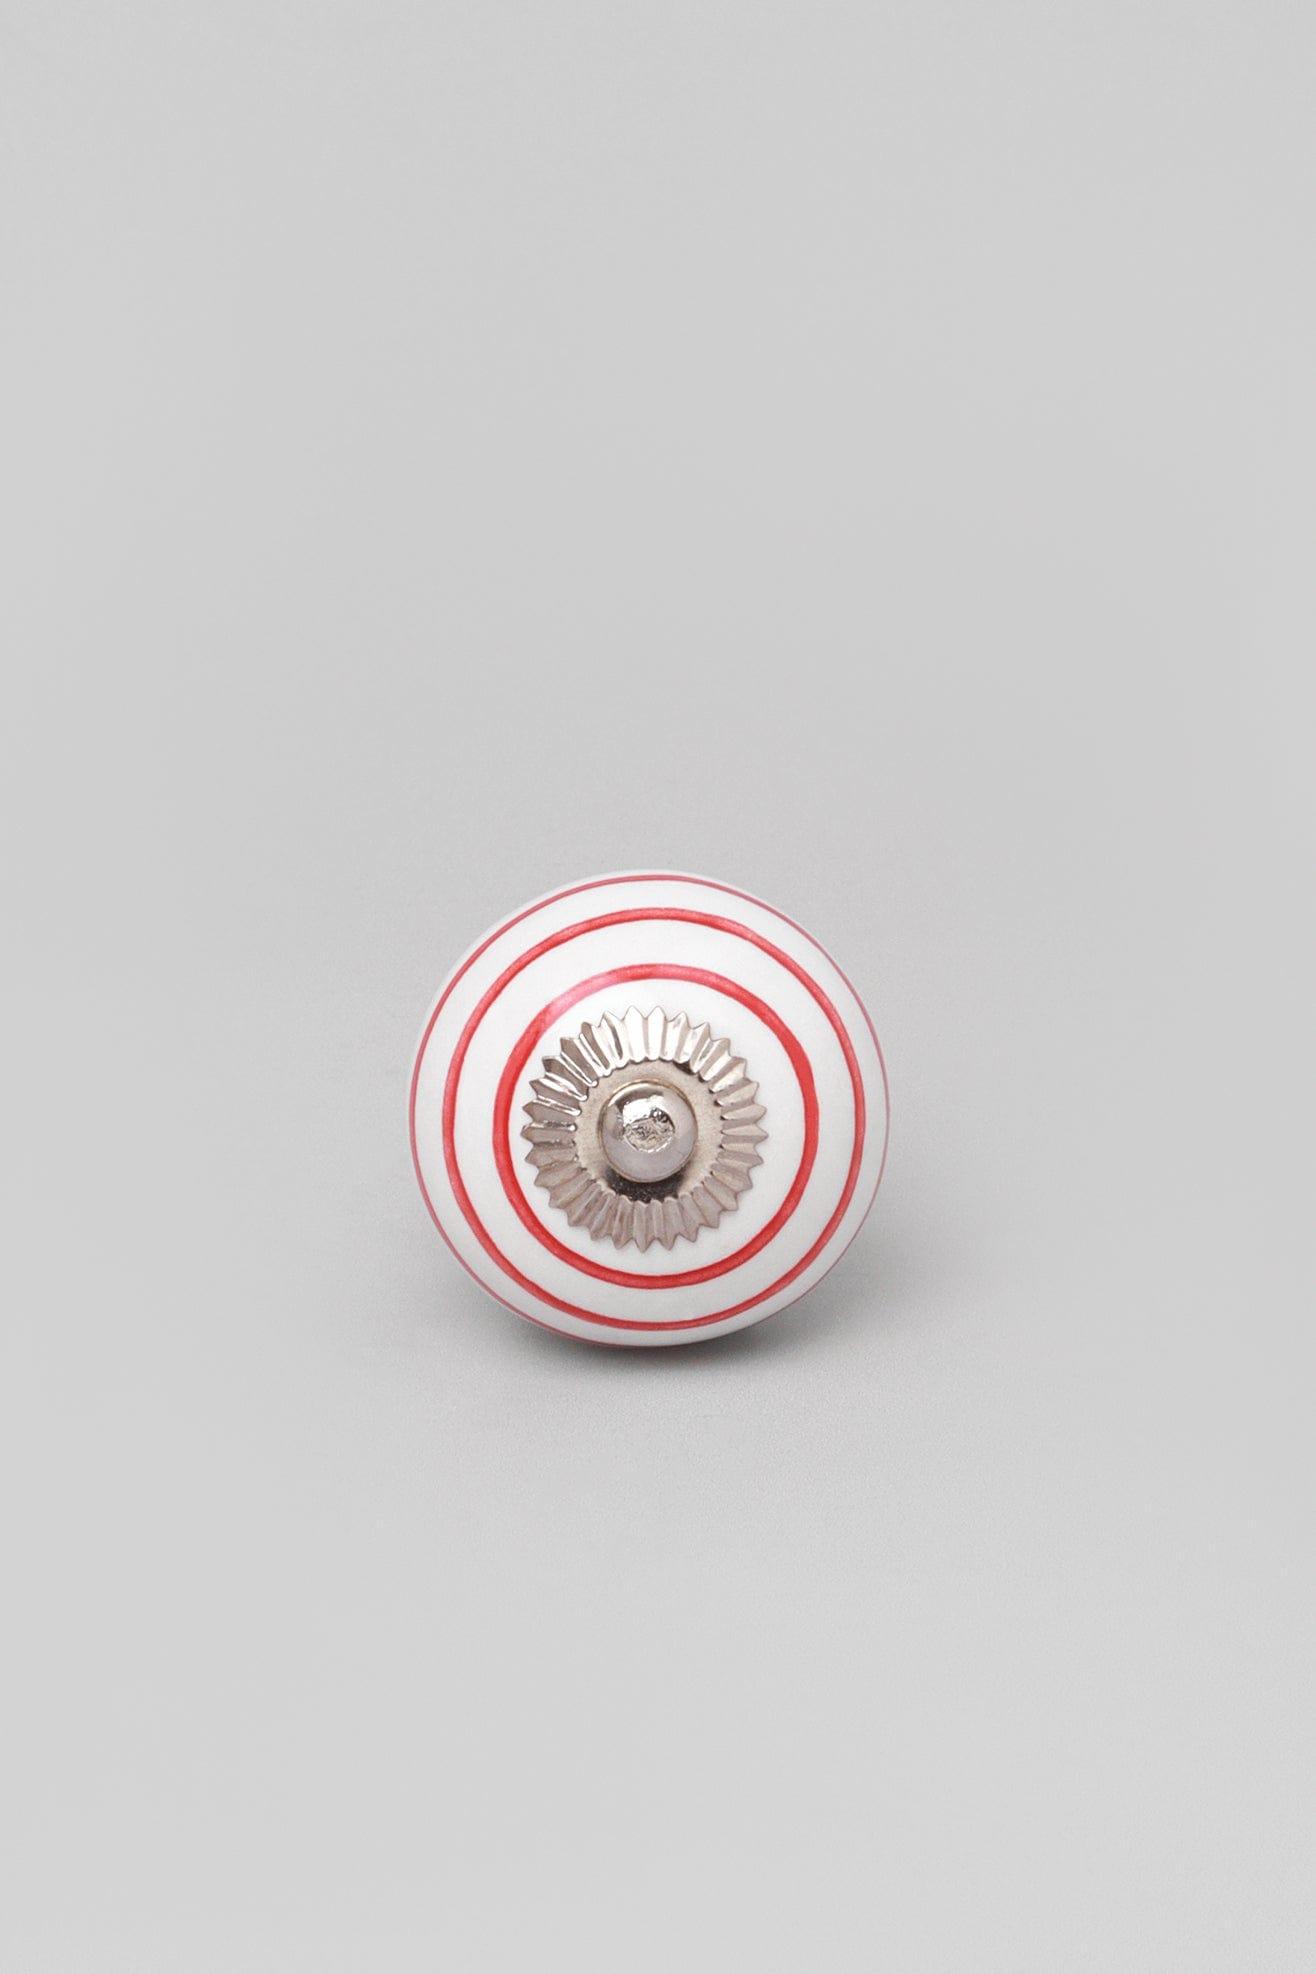 Gdecorstore Door Knobs & Handles Red Striped on White Base Ceramic Door Knobs Cupboard Pull Handles